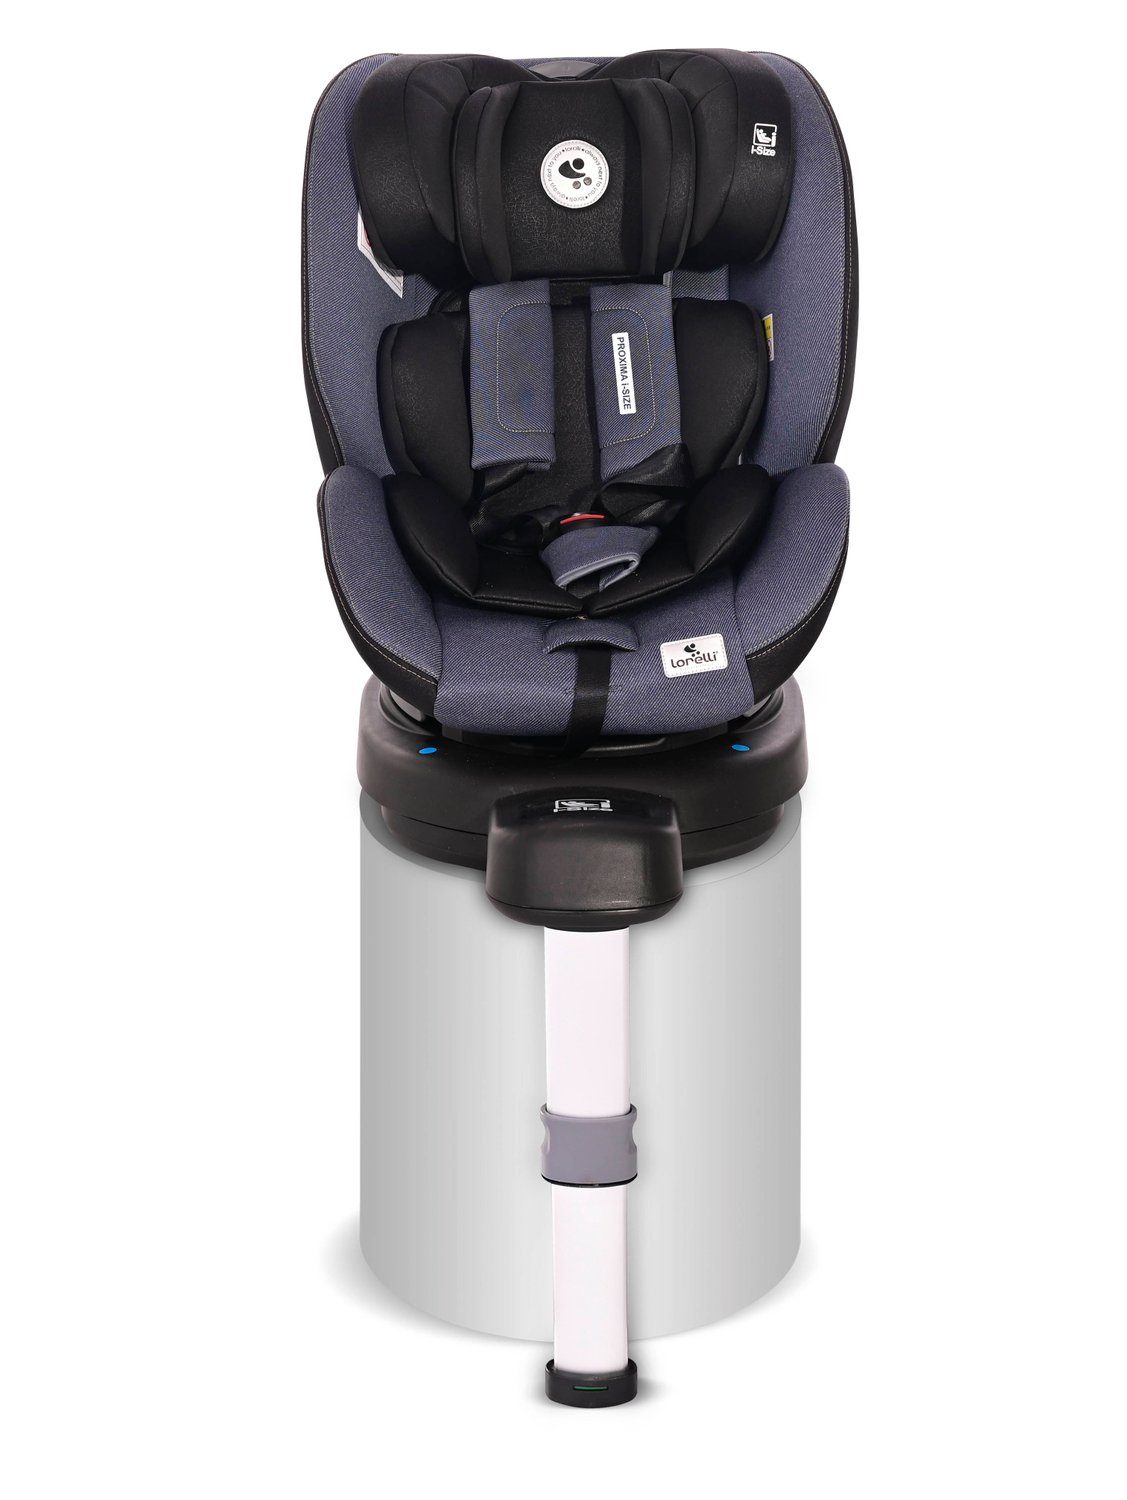 Lorelli Autokindersitz Kindersitz Proxima bis: Gruppe Isofix kg) i-Size, verstellbar 25 0/1/2 kg, blau - 25 (0